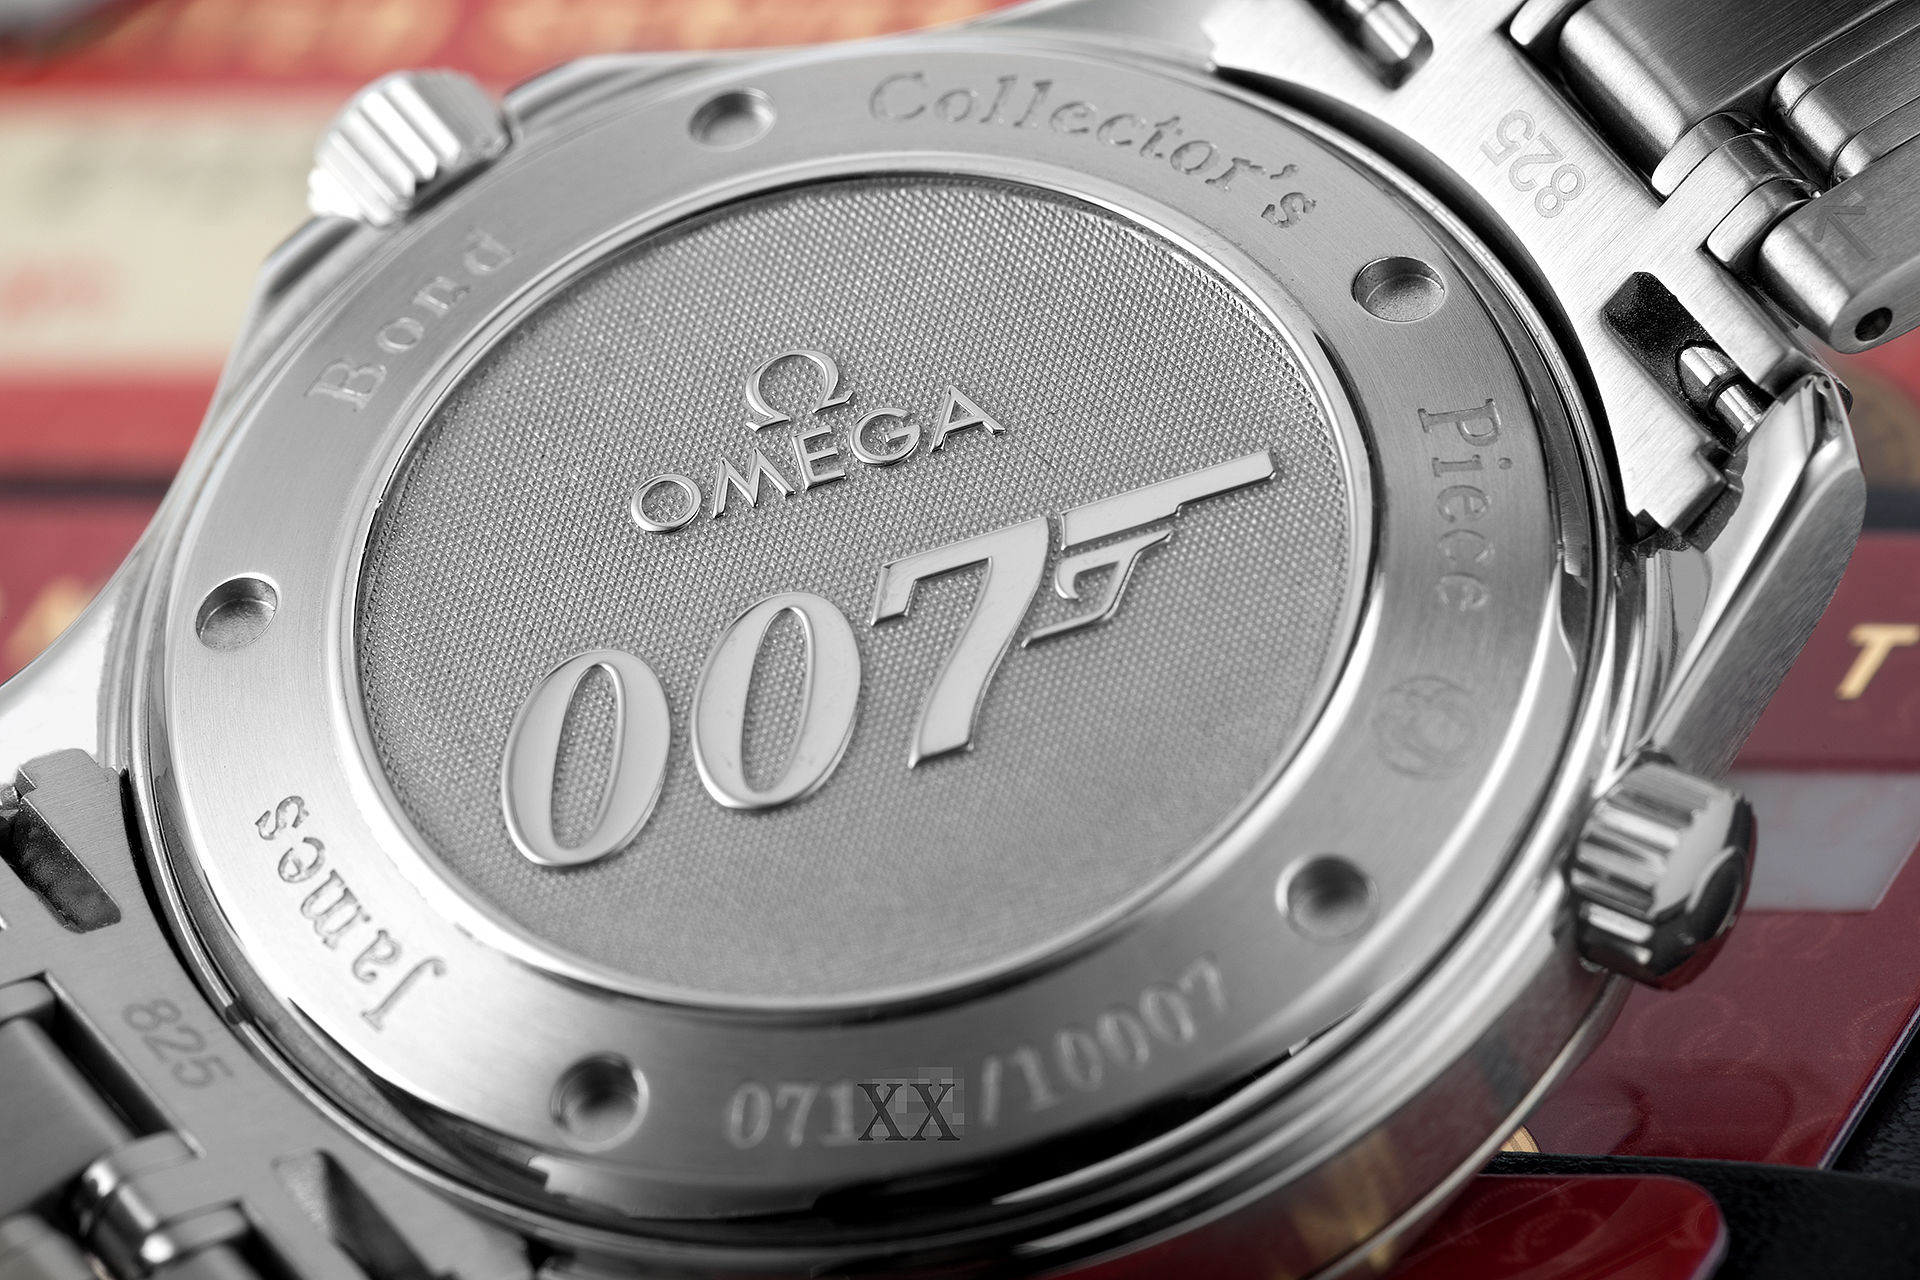 ref 21230412001001 | James Bond 'Limited Edition' | Omega Seamaster